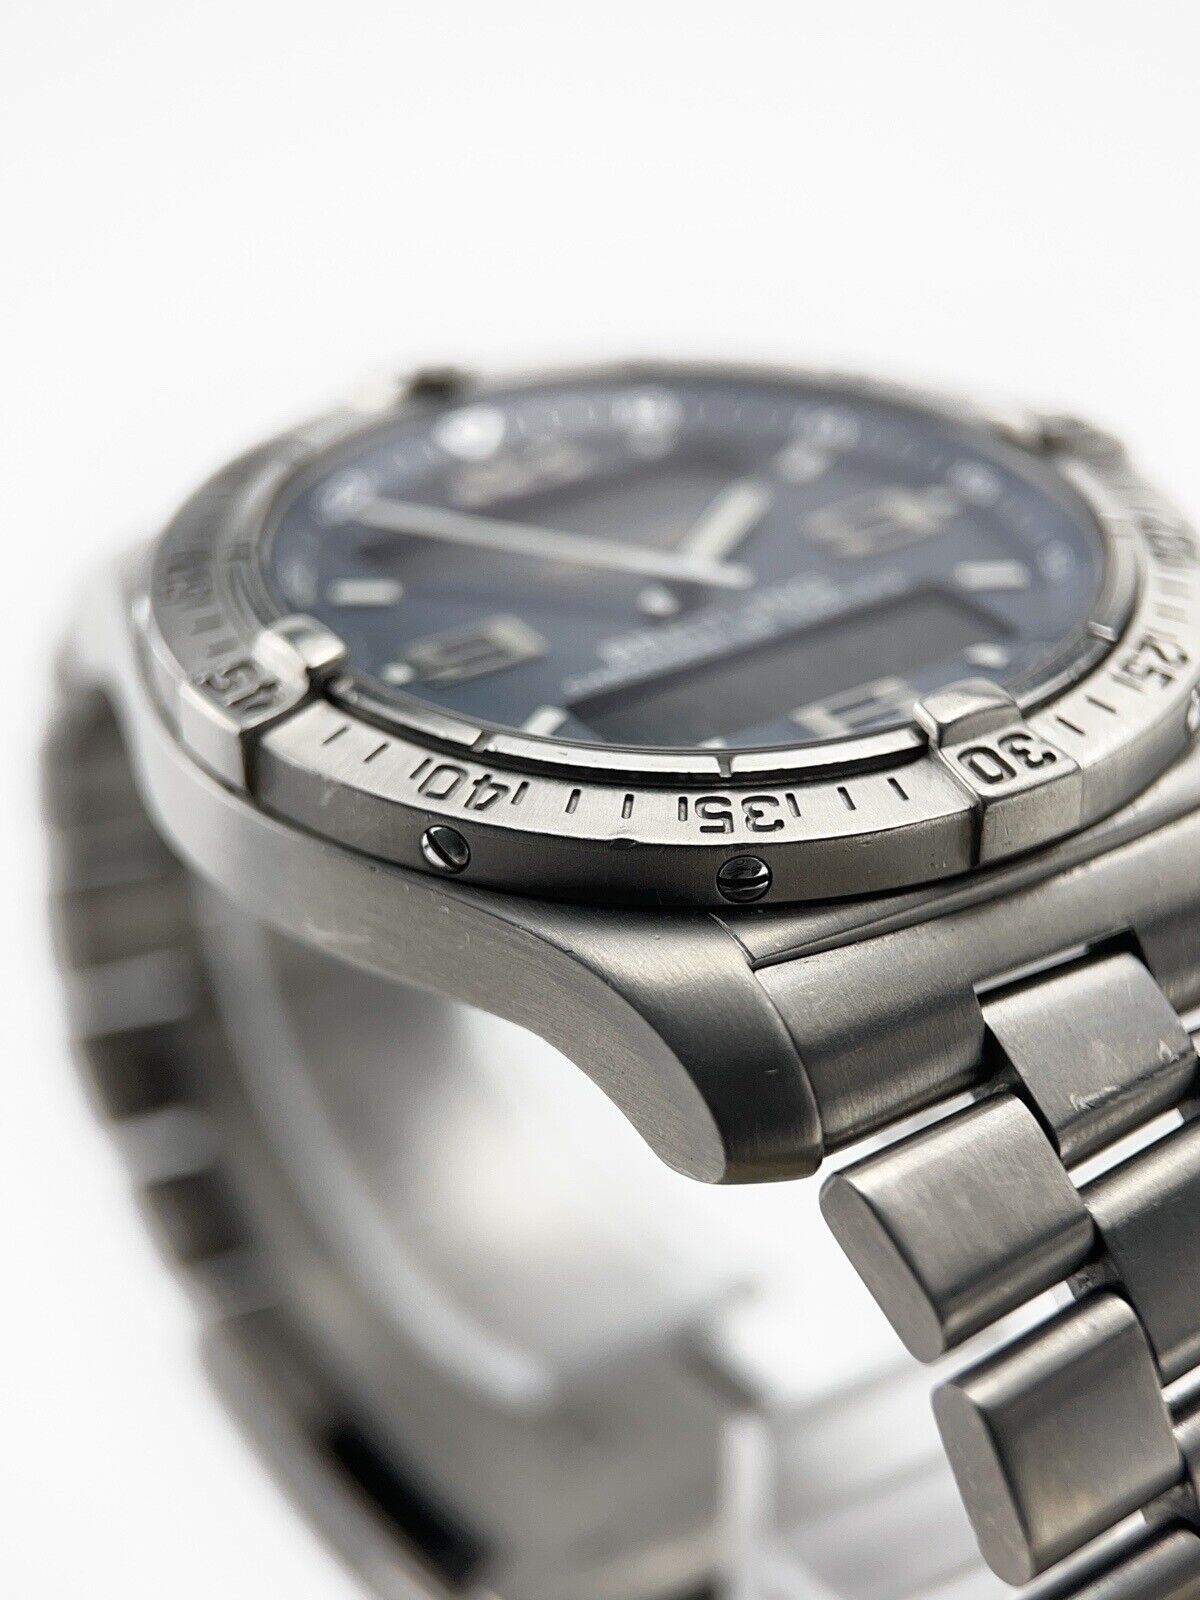 Breitling Aerospace Titanium Watch E79362 Quartz Movement 42mm - Watch Only